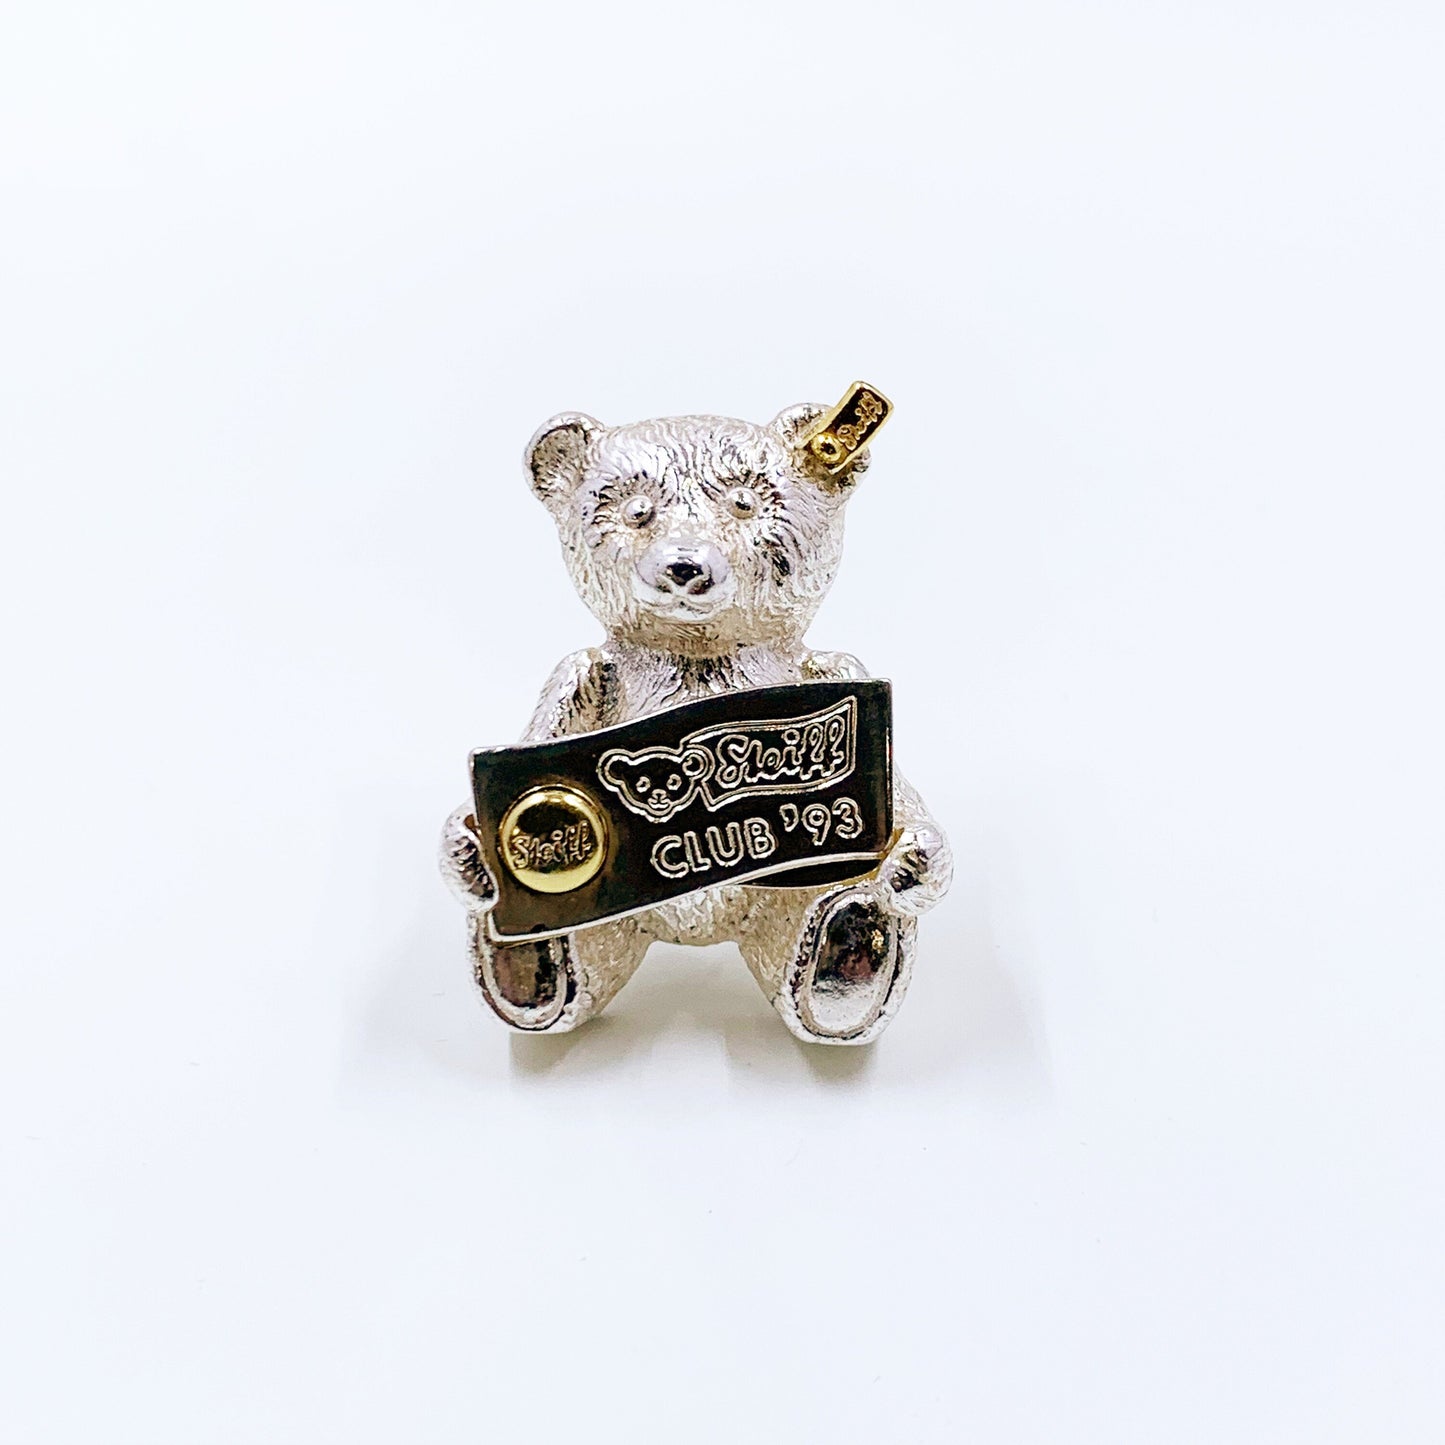 Vintage Sterling Silver Steiff Bear Brooch | Teddy Bear Brooch | Steiff Club '93 Brooch